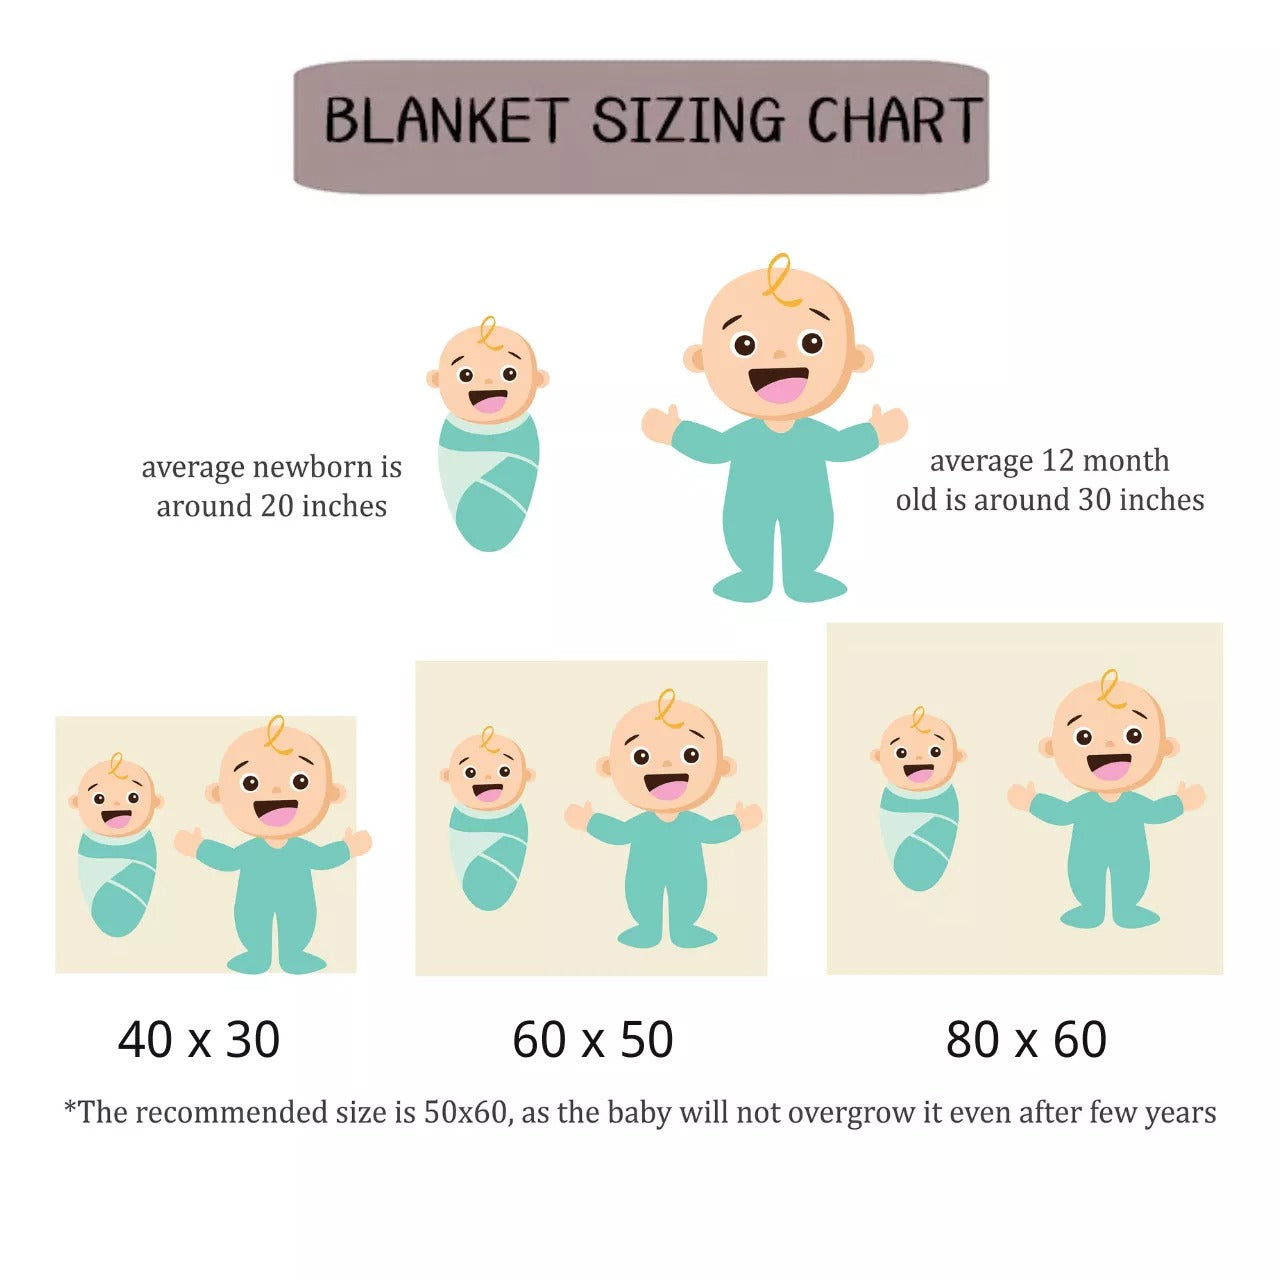 Customized Gift To Baby Newborn Throw Blanket Full Month Baby Cute Gift Premuim Blanket For Baby